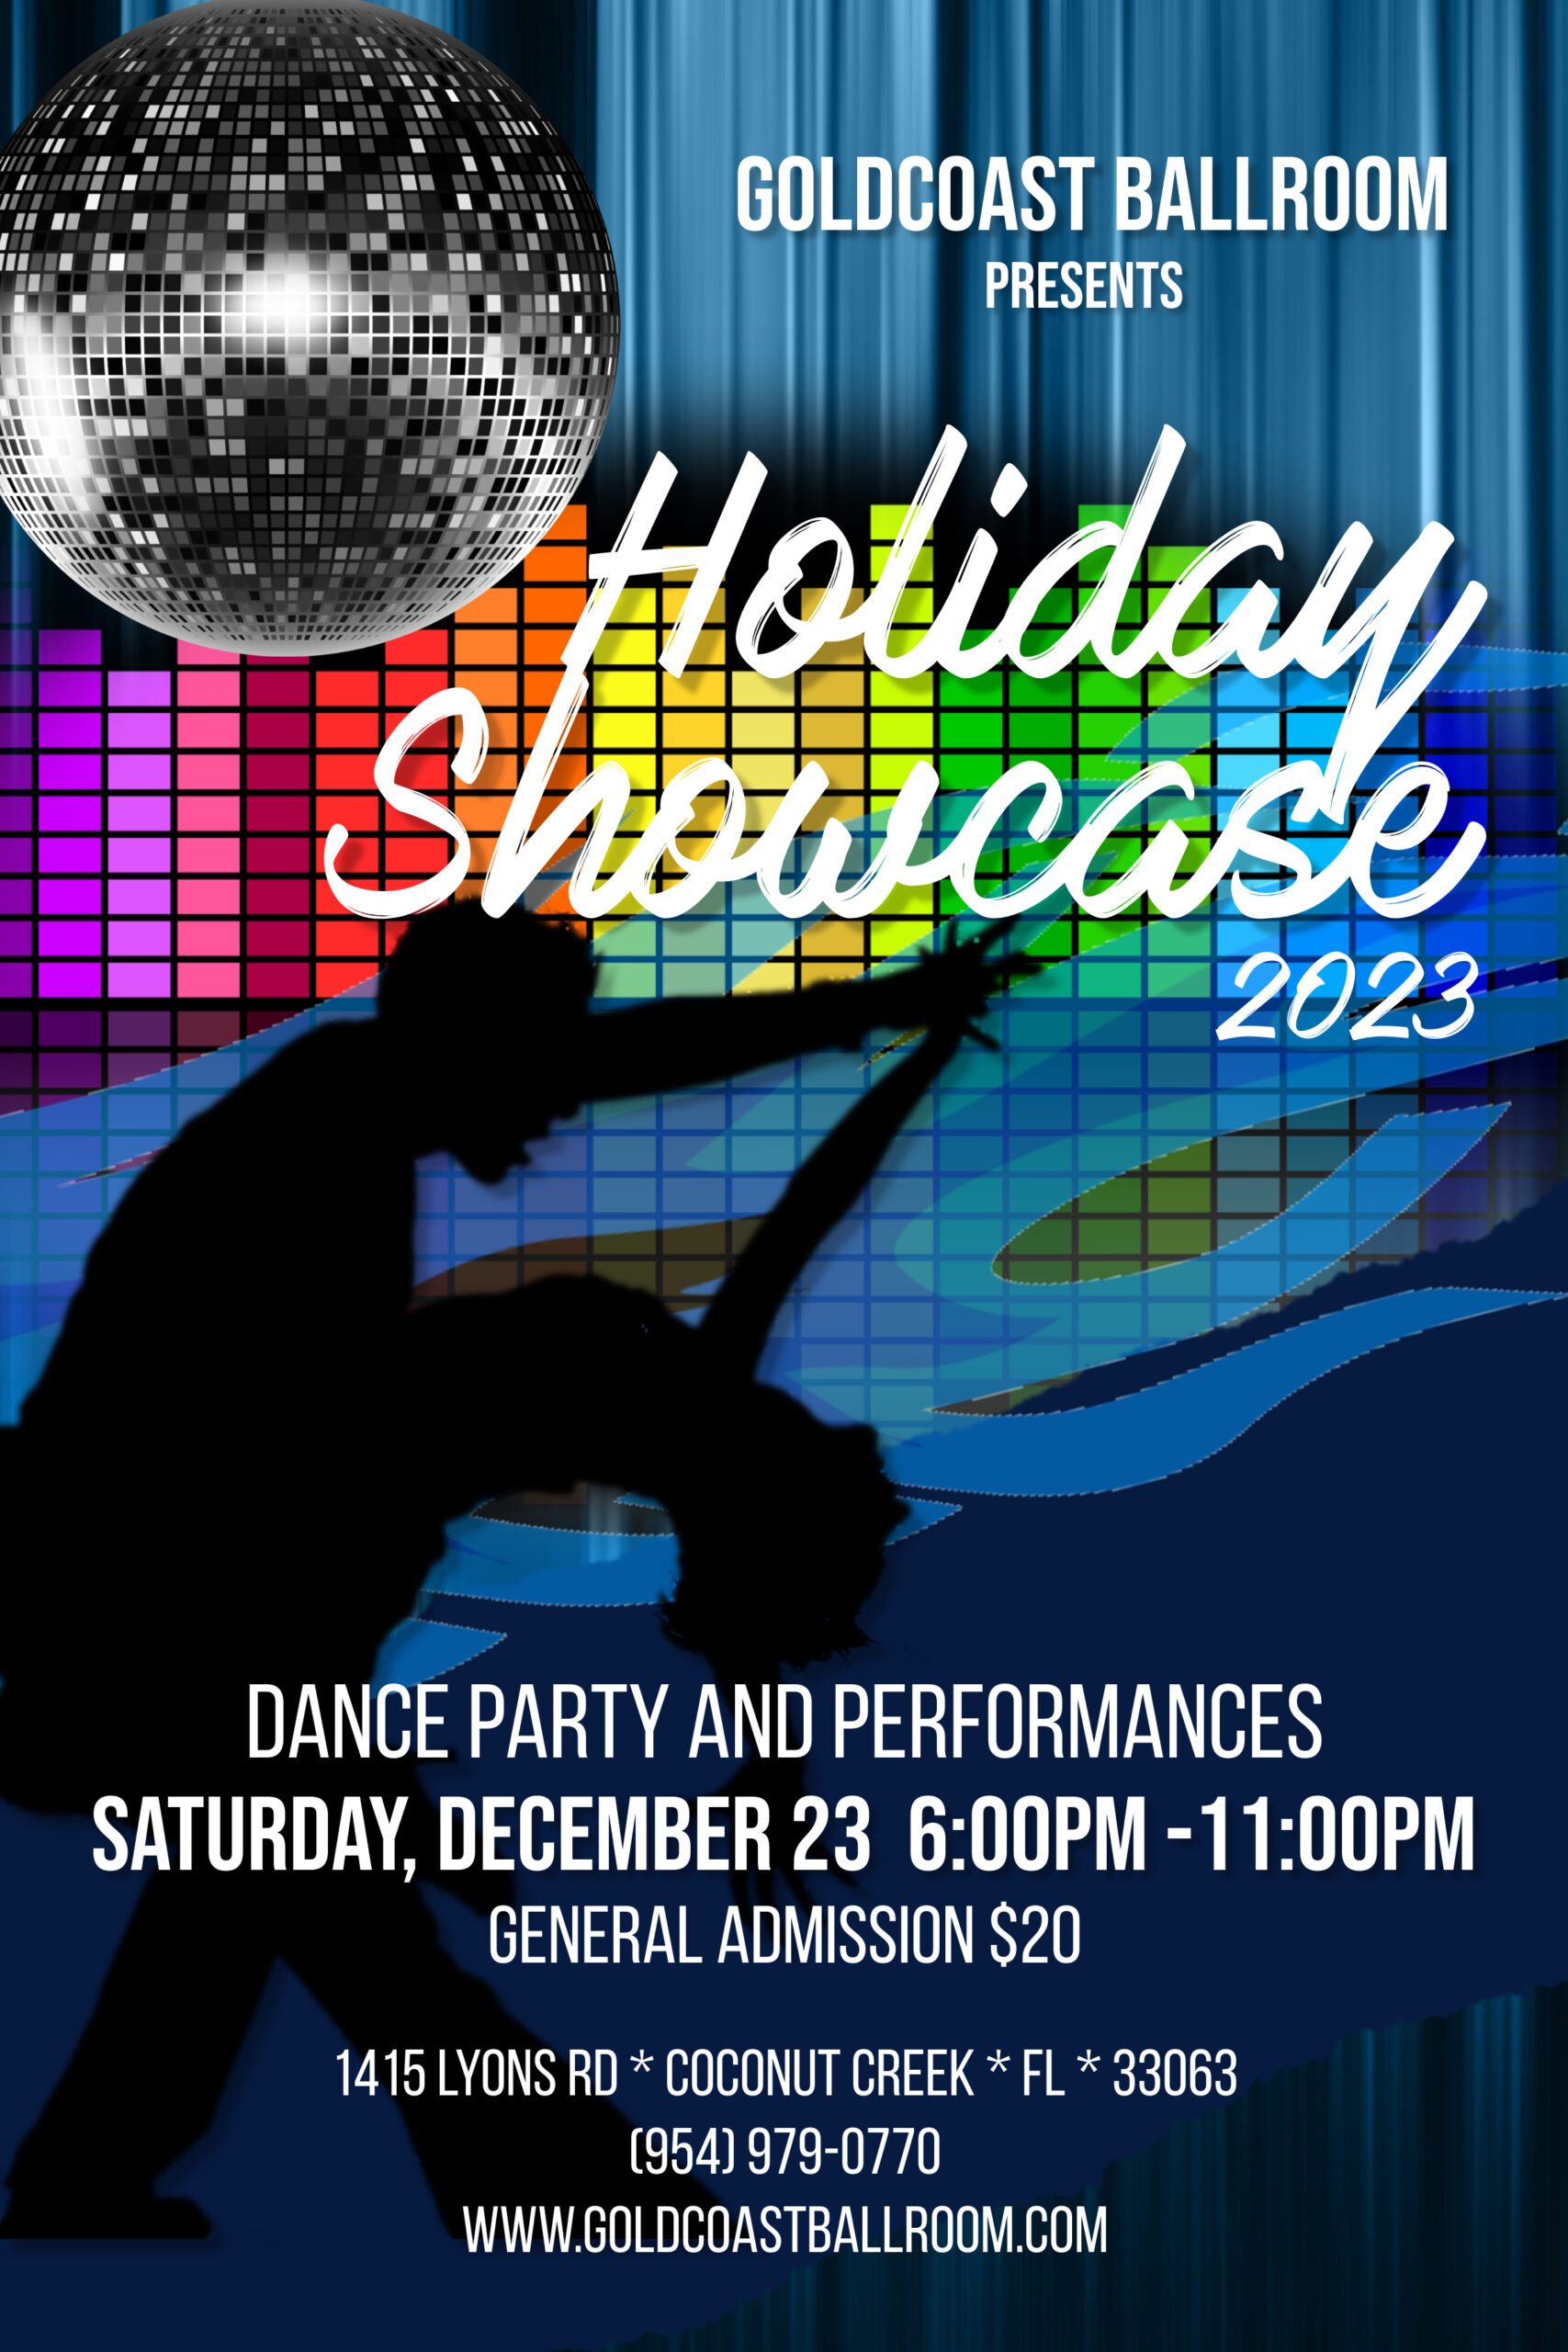 Goldcoast Ballroom Holiday Showcase 2023 - December 23, 2023